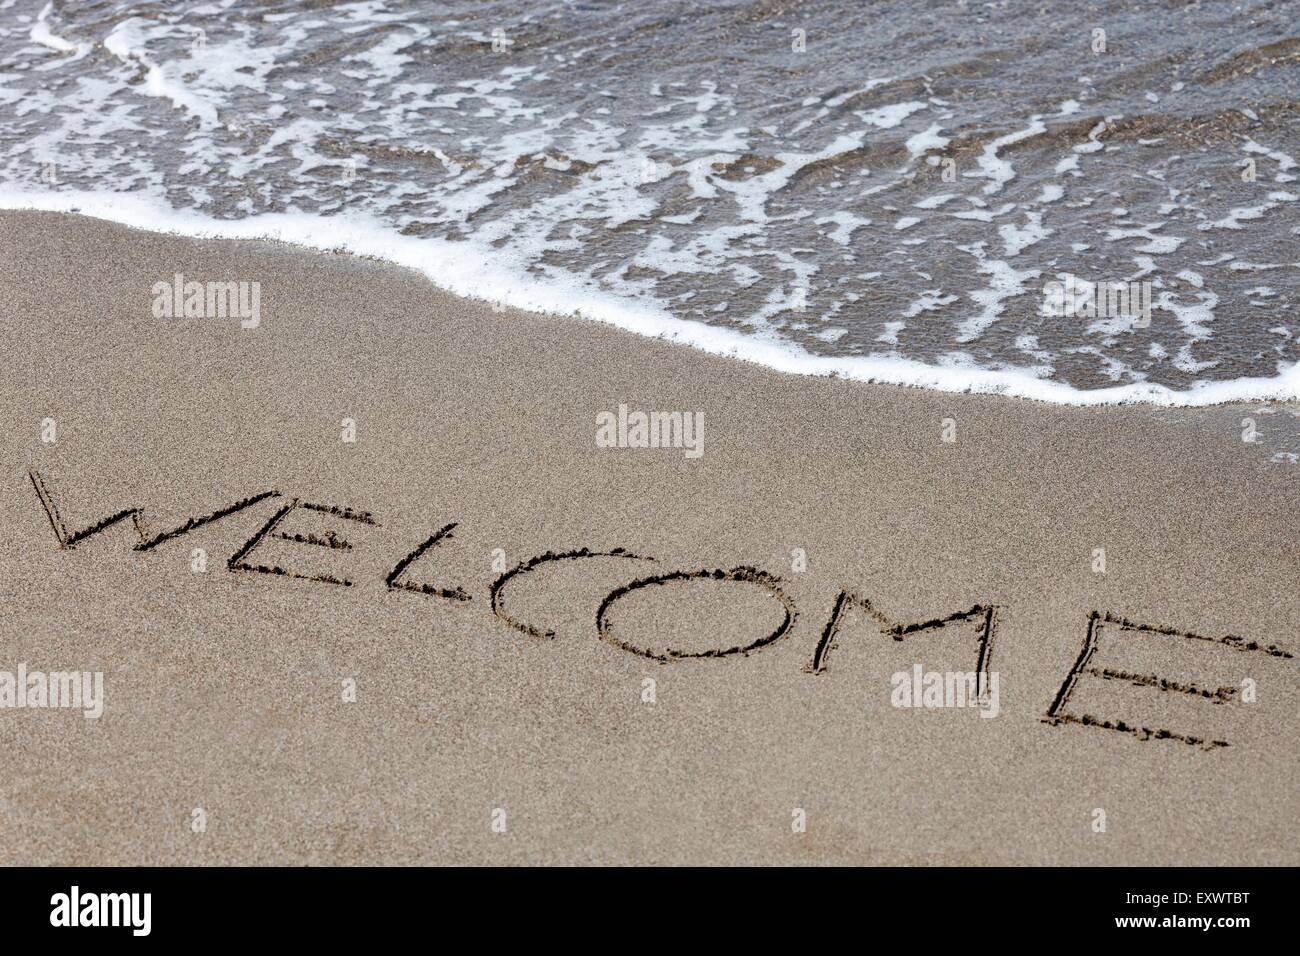 Bienvenido pintado en la arena, Italia, Europa Foto de stock